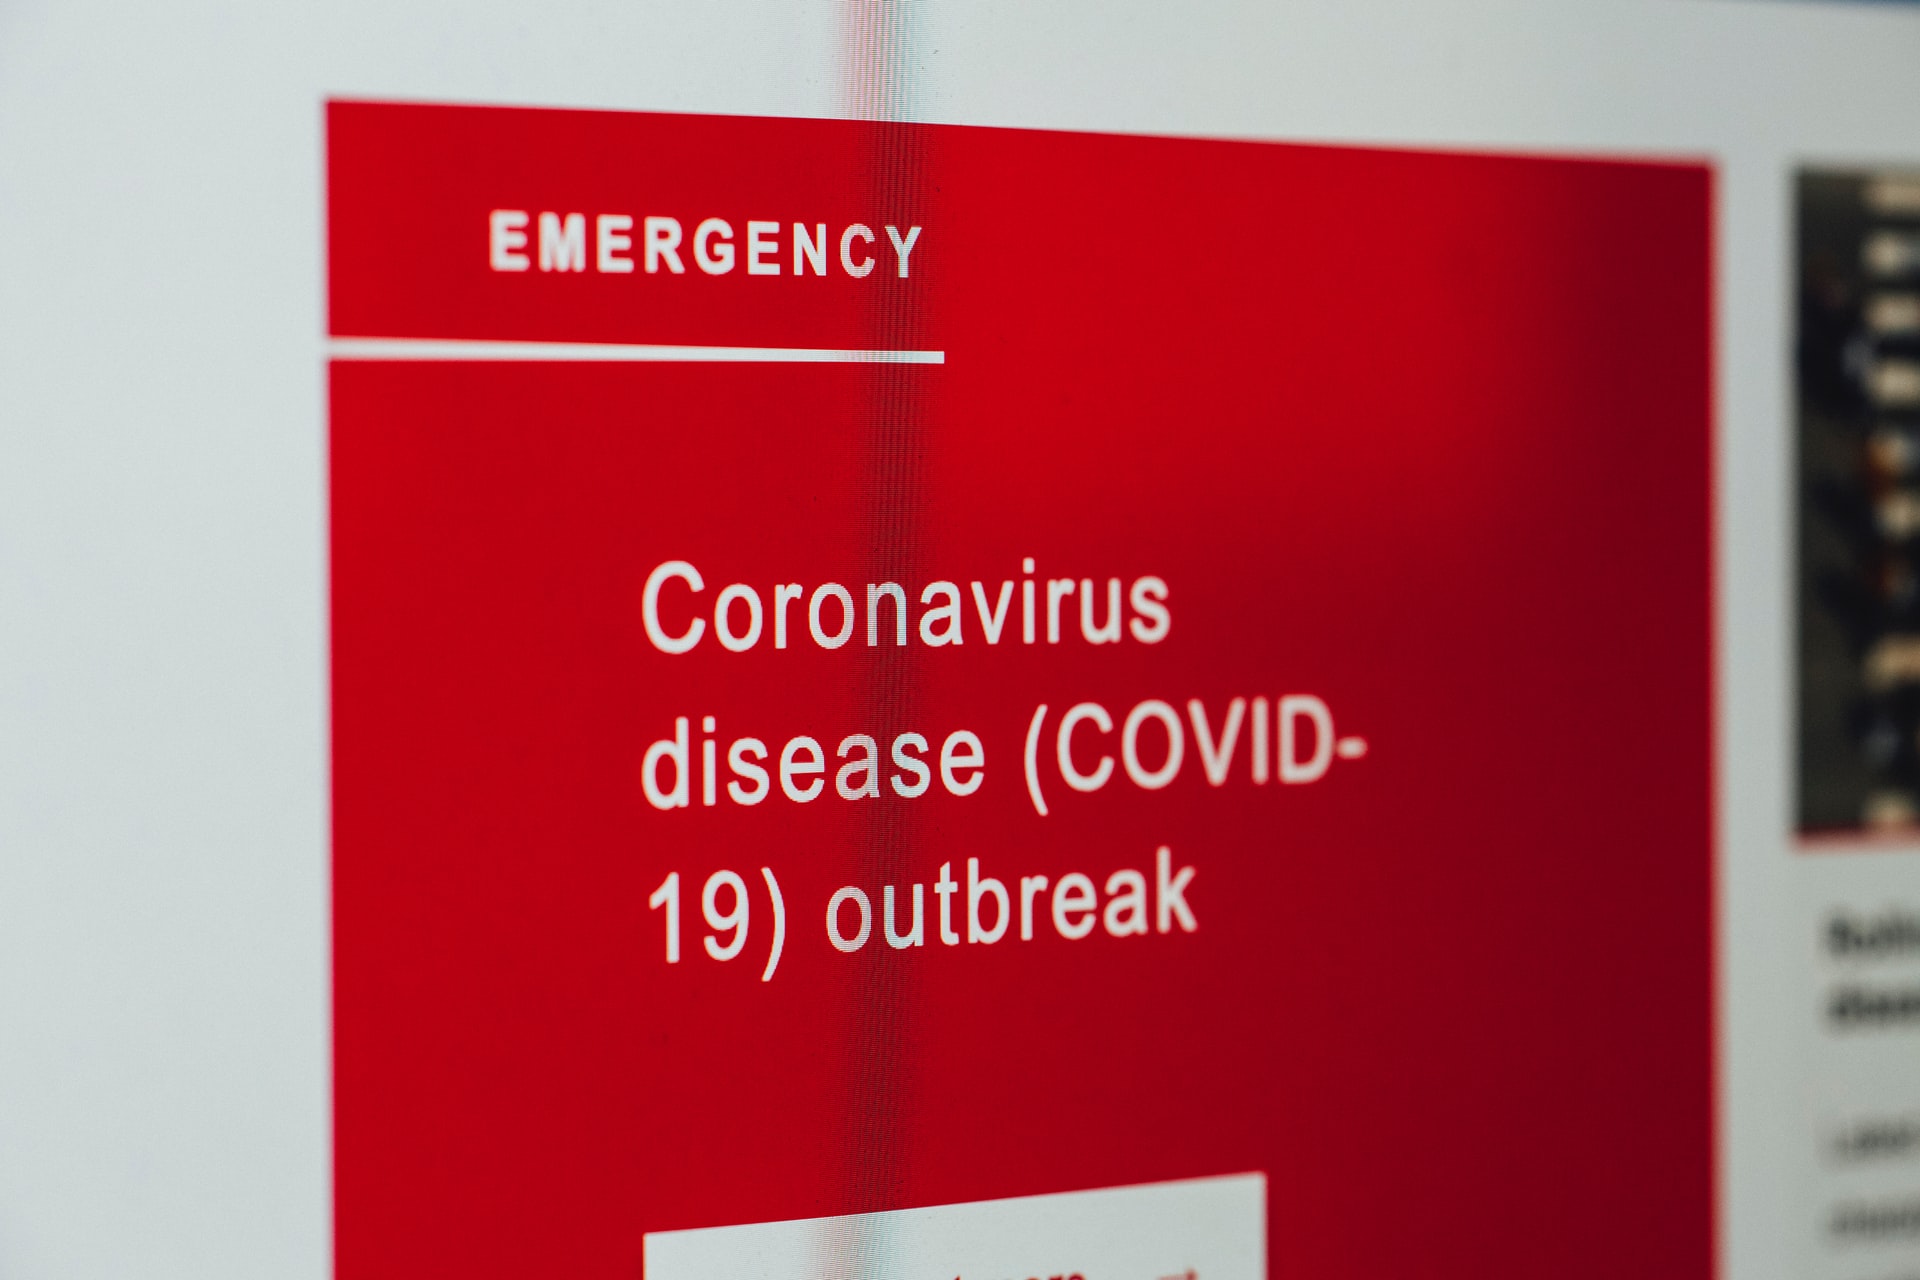 Coronavirus disease (COVID-19) outbreak – warning alarm message